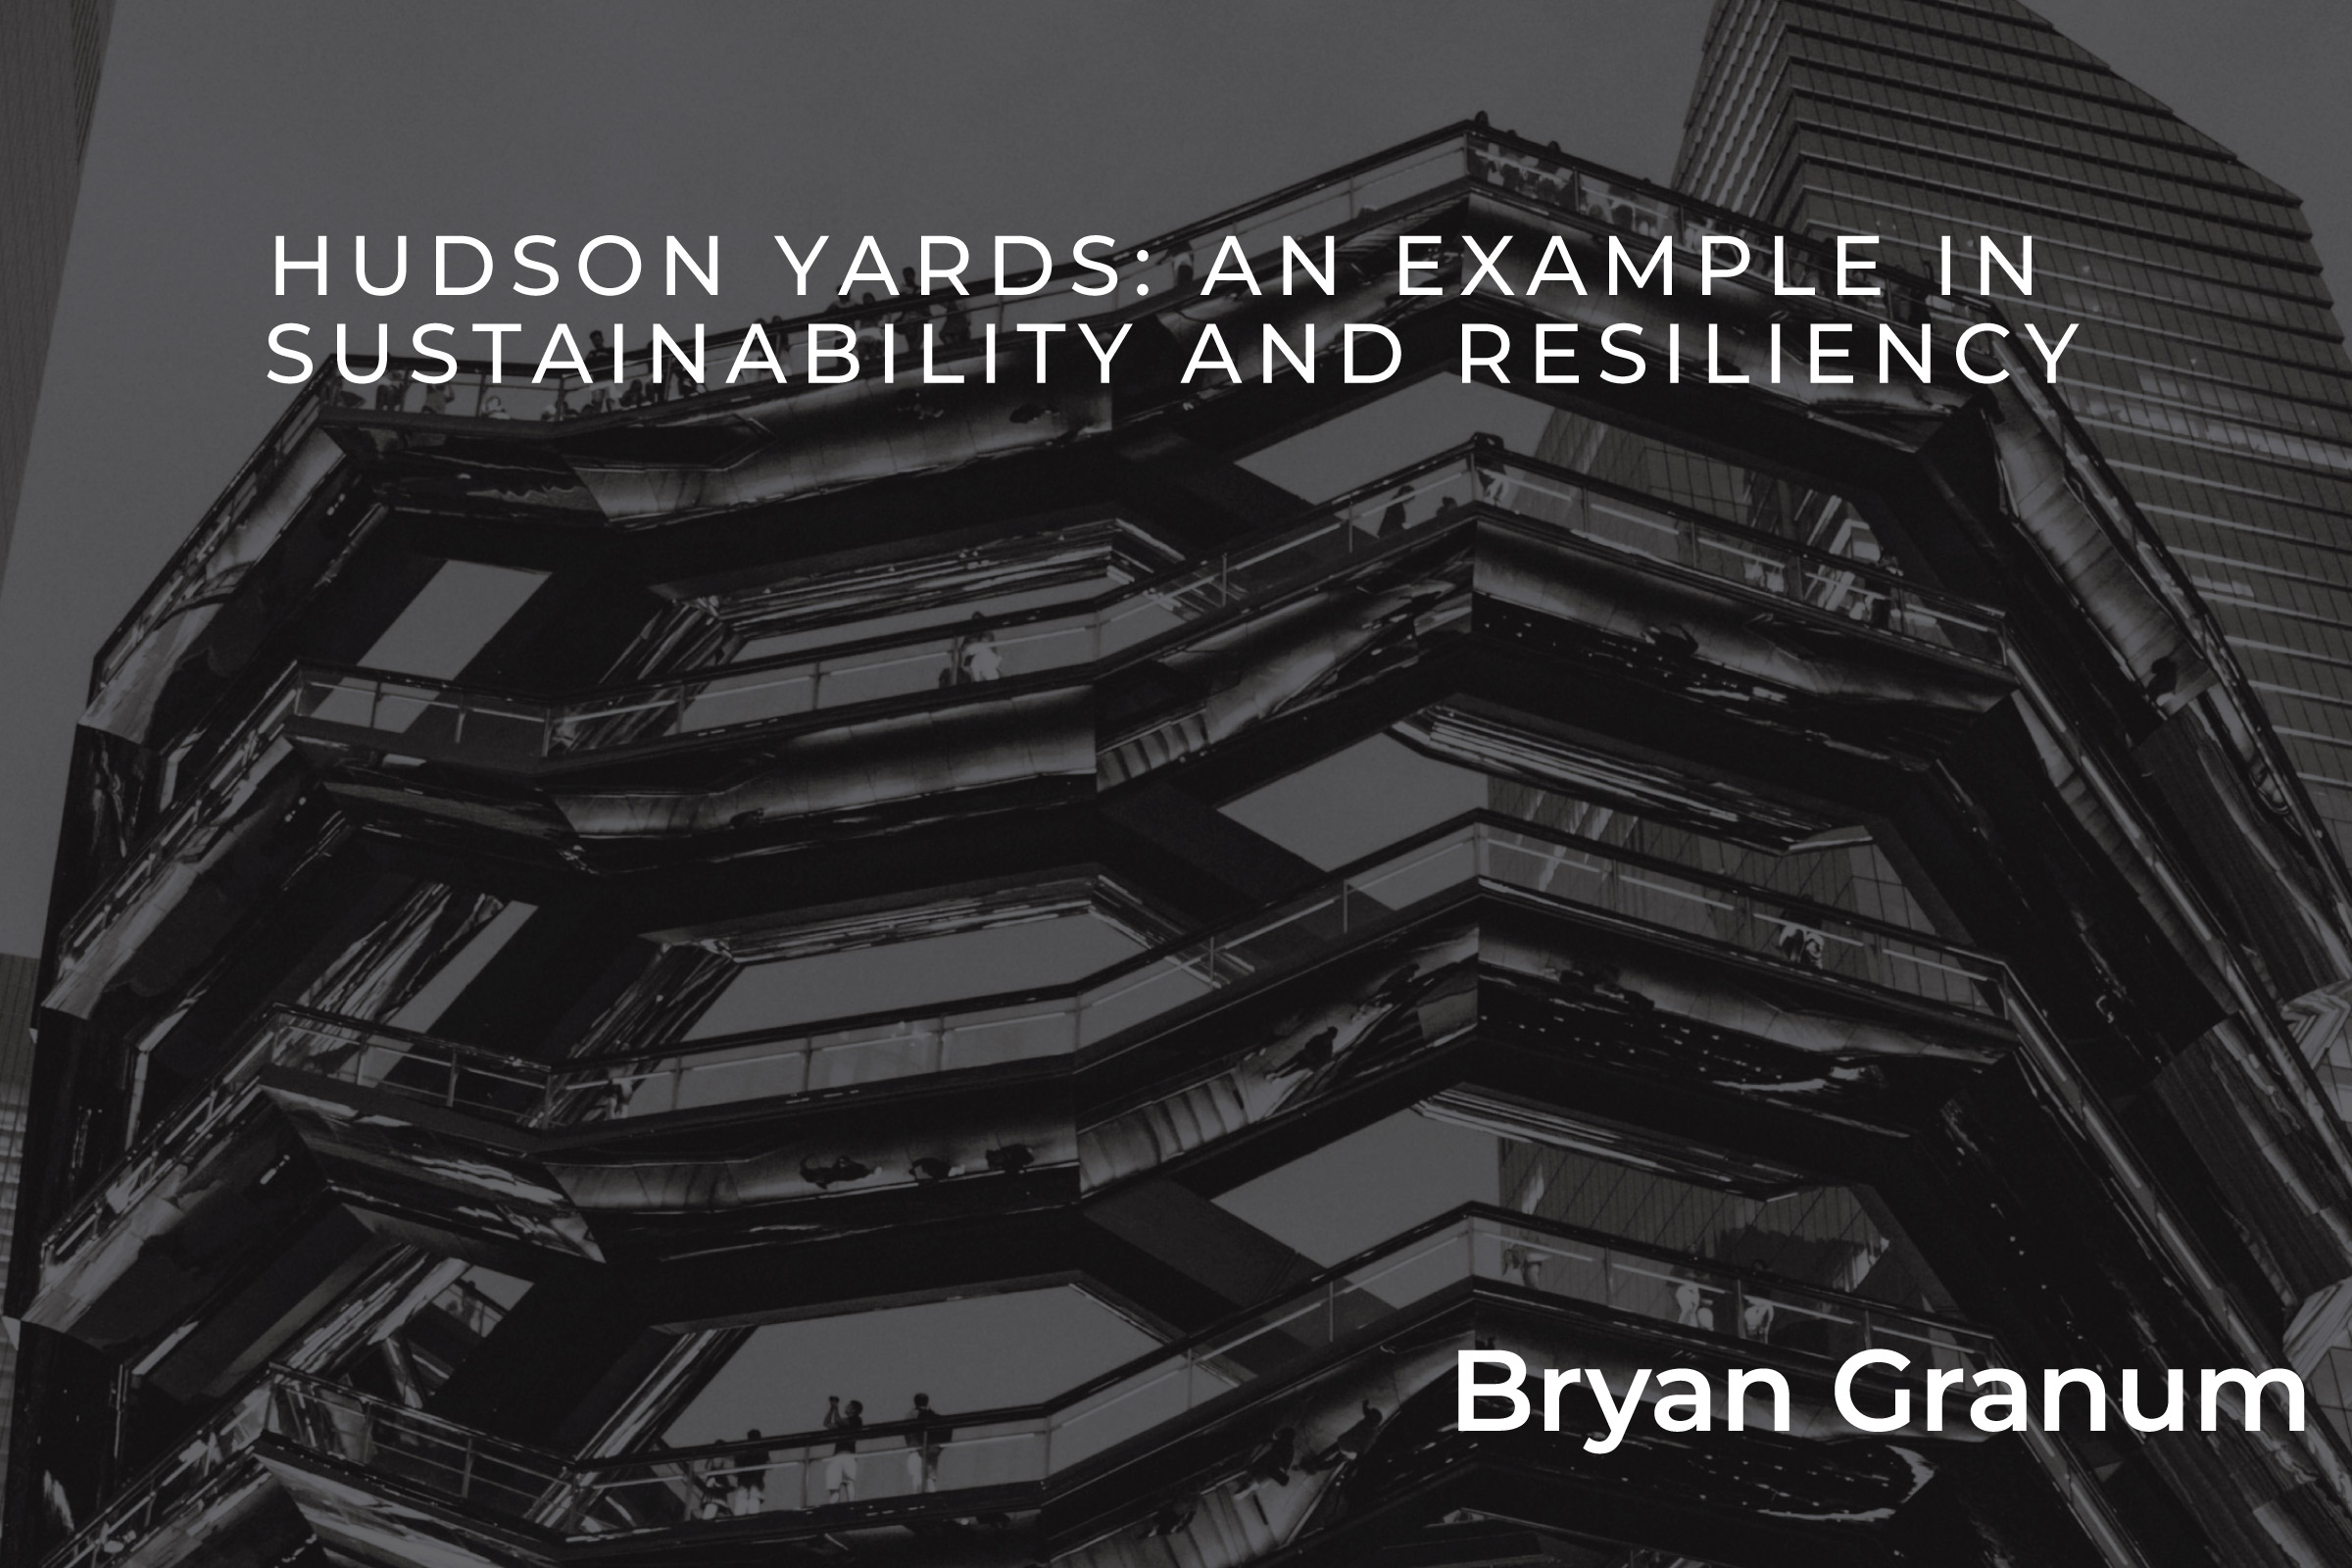 Bryan-Granum-sustainable